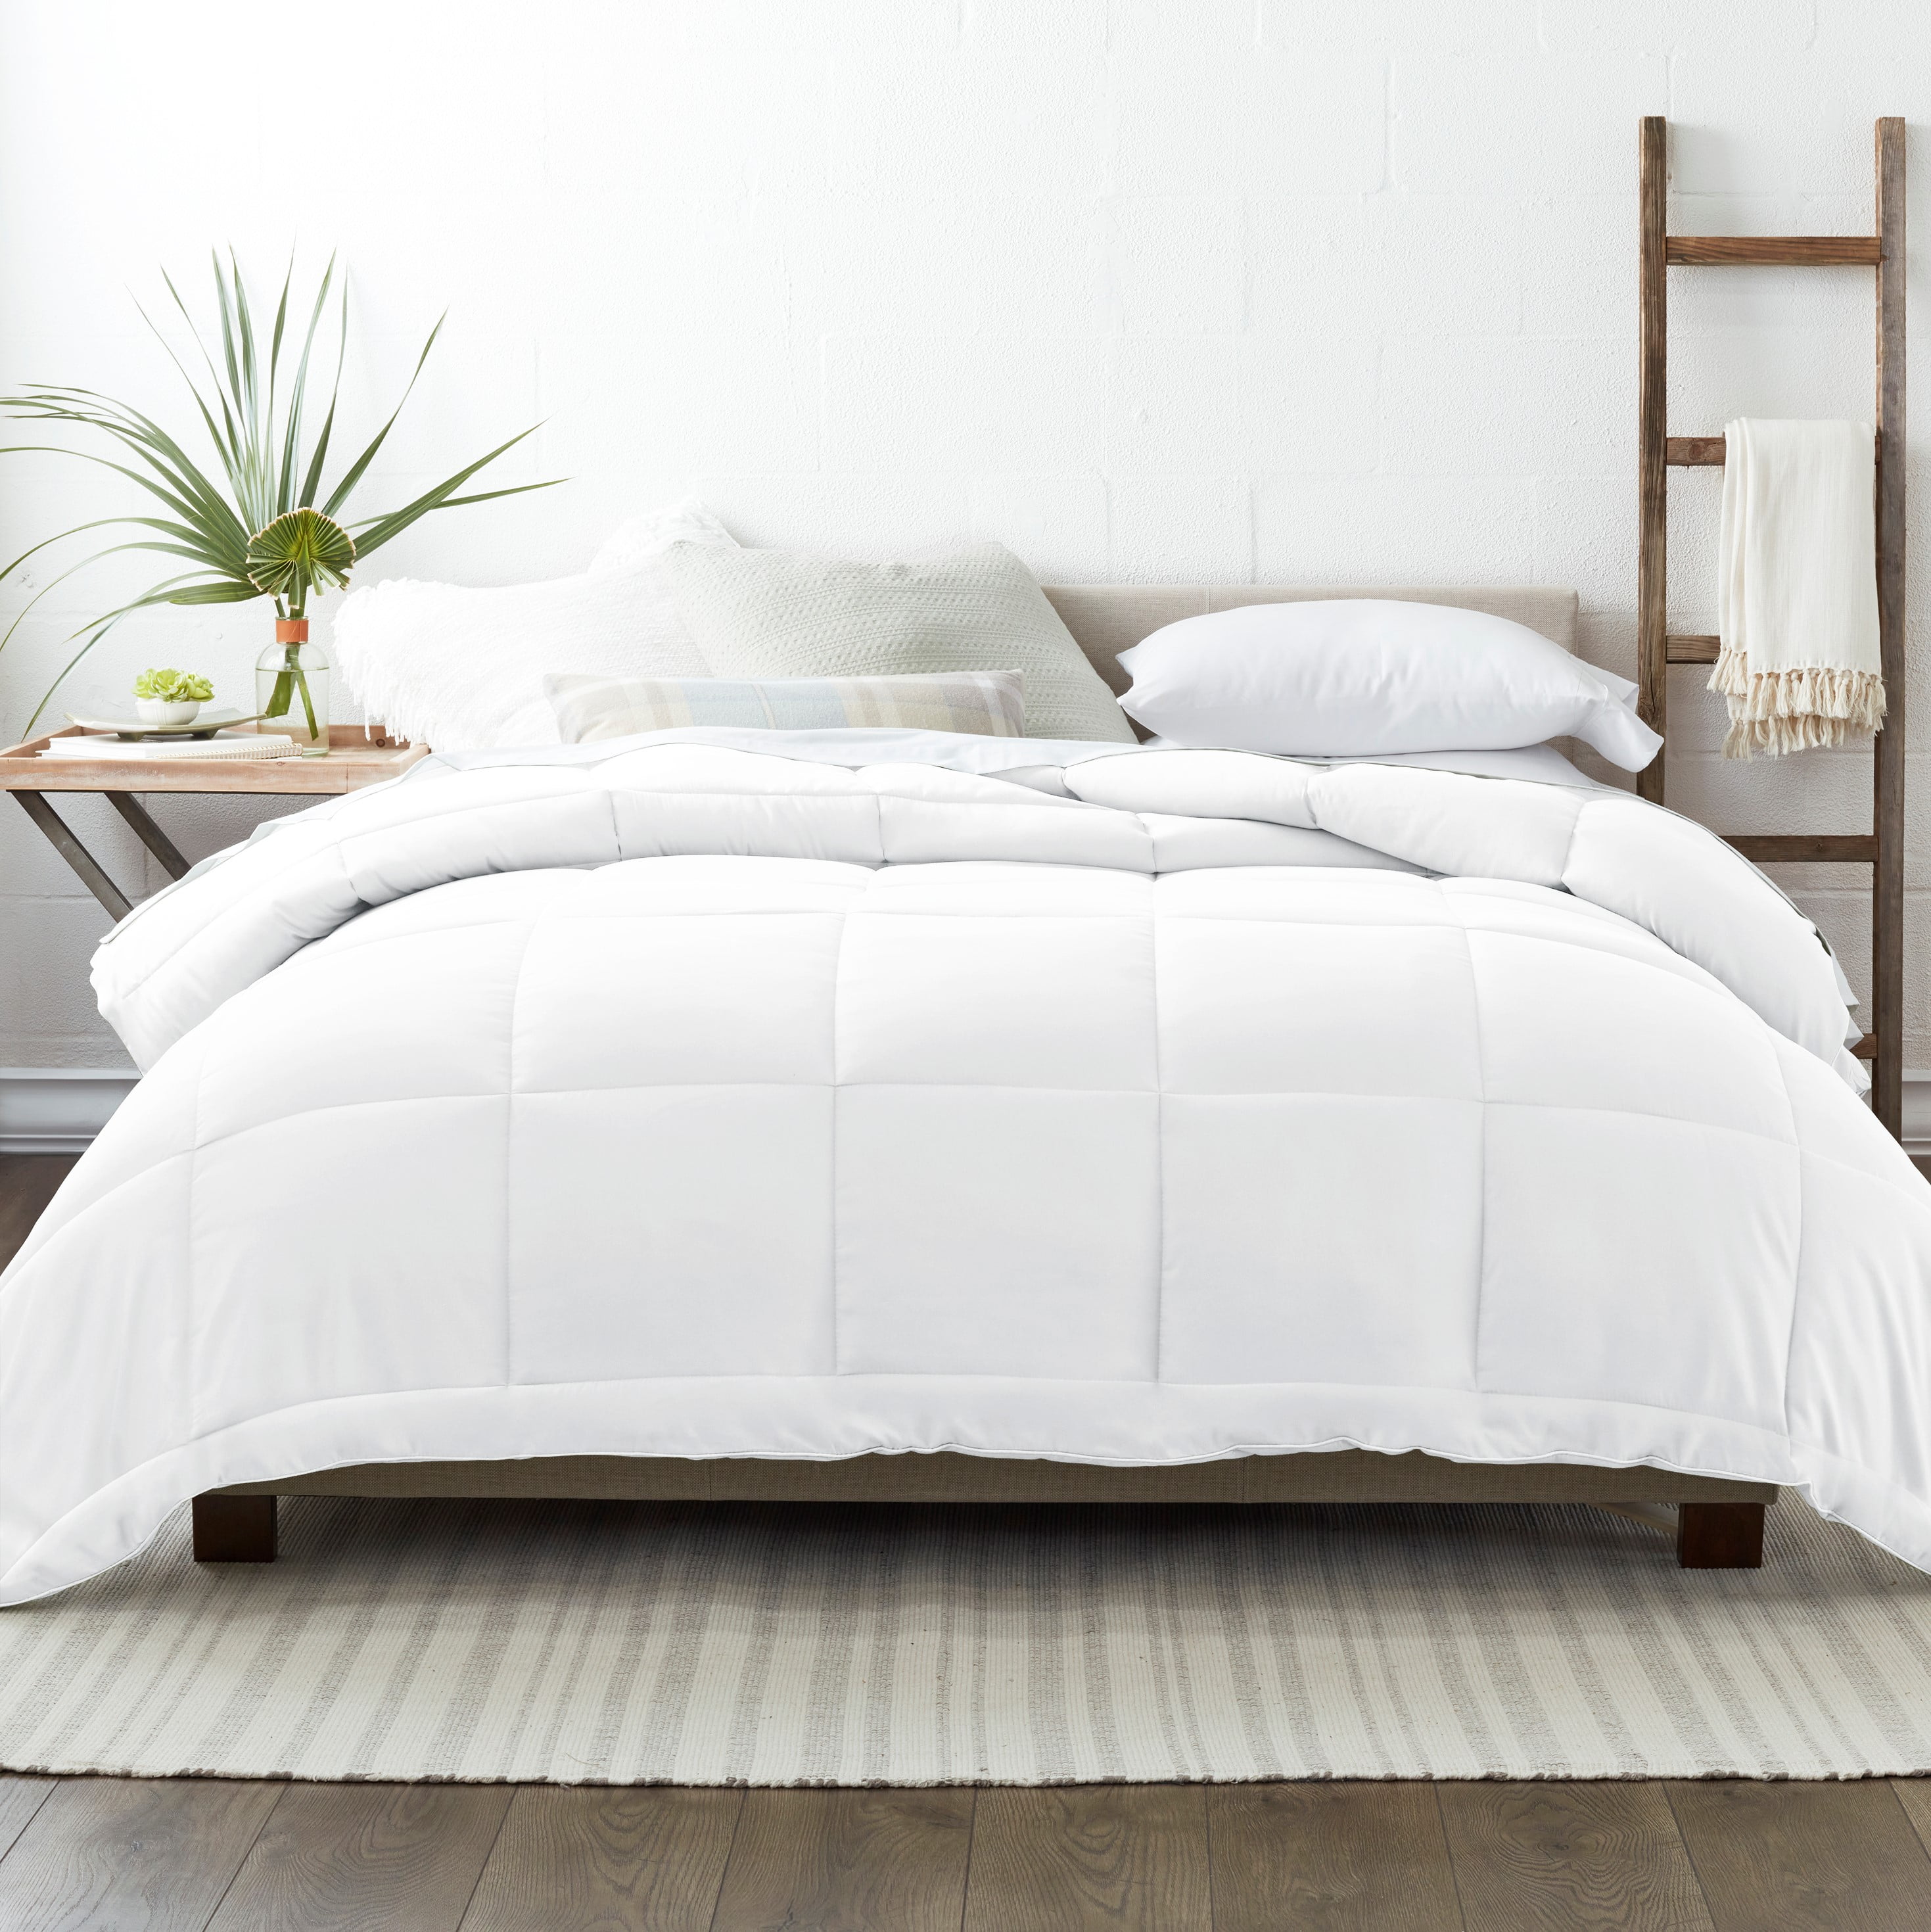 All Season Comforter Solid White Down Alternative Comforter Twin&Full/Queen Size 